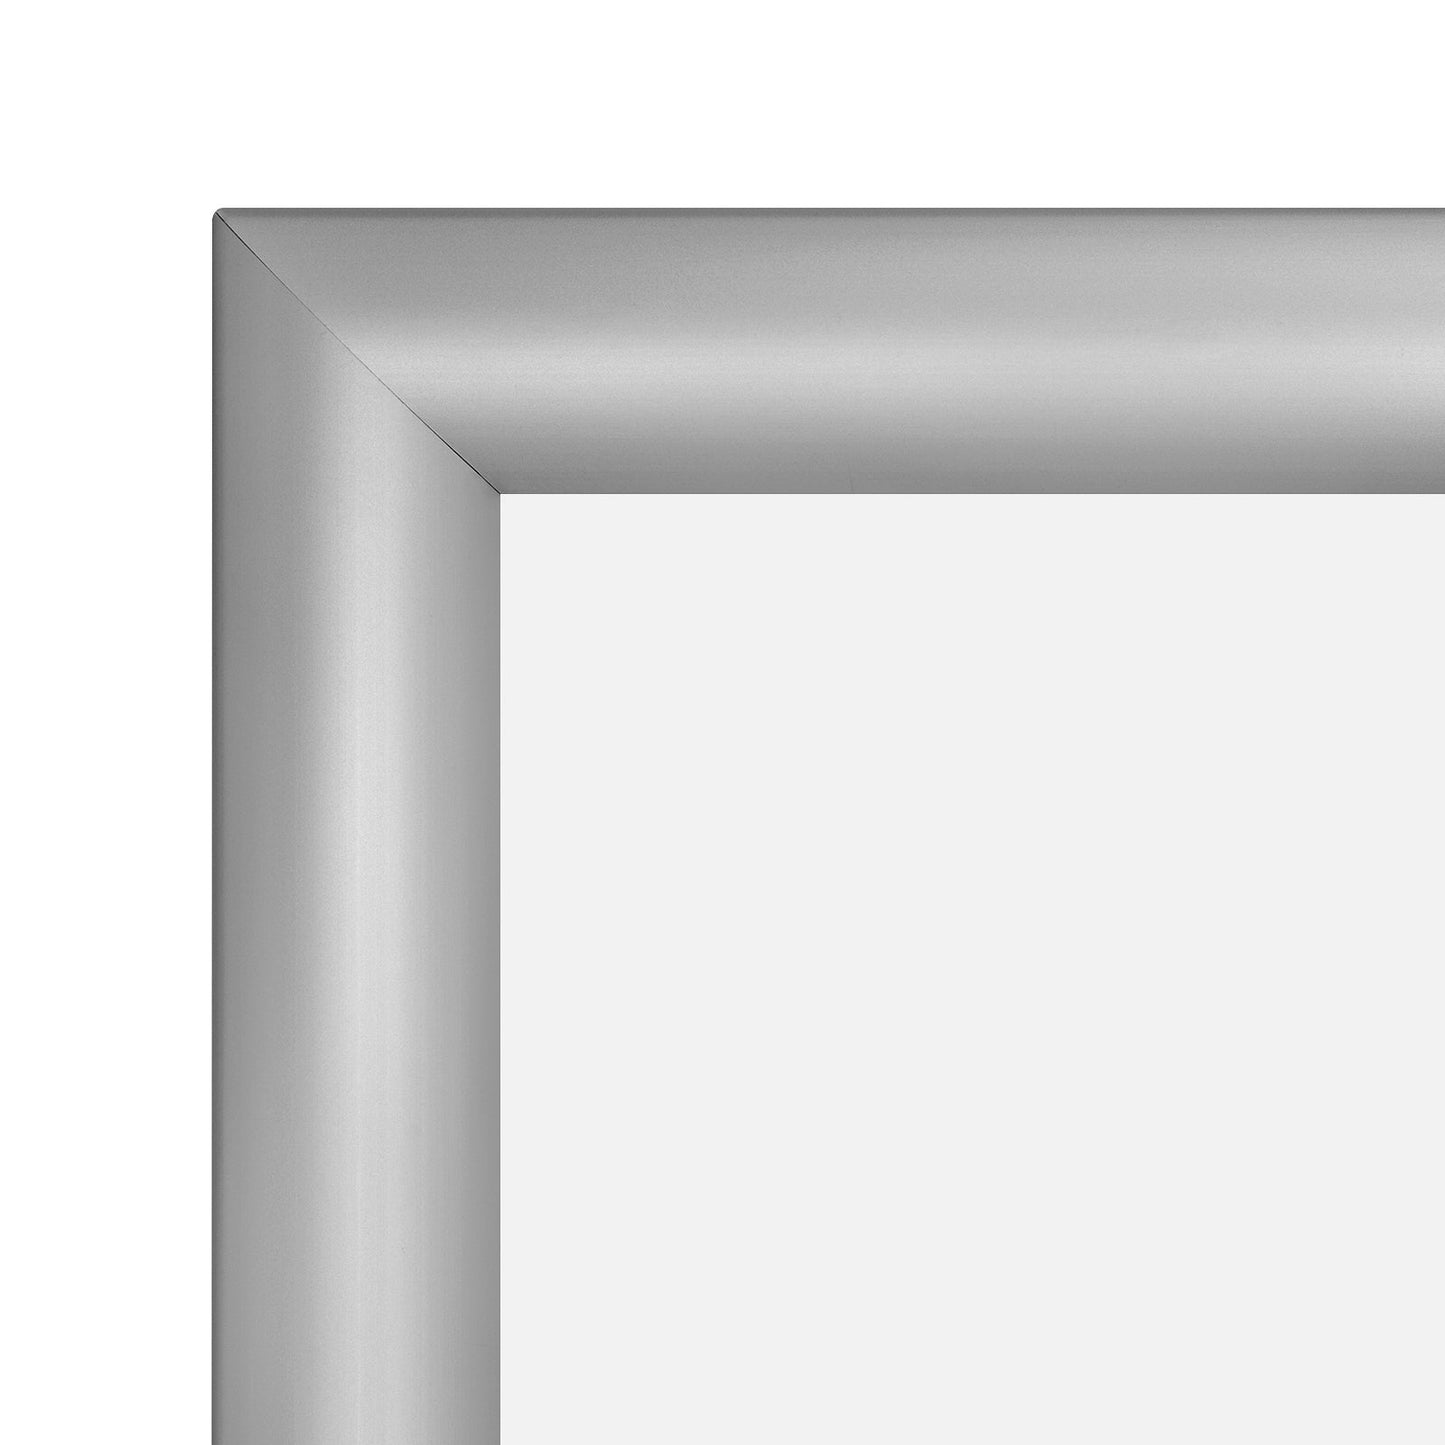 19x30 Silver SnapeZo® Snap Frame - 1.2" Profile - Snap Frames Direct